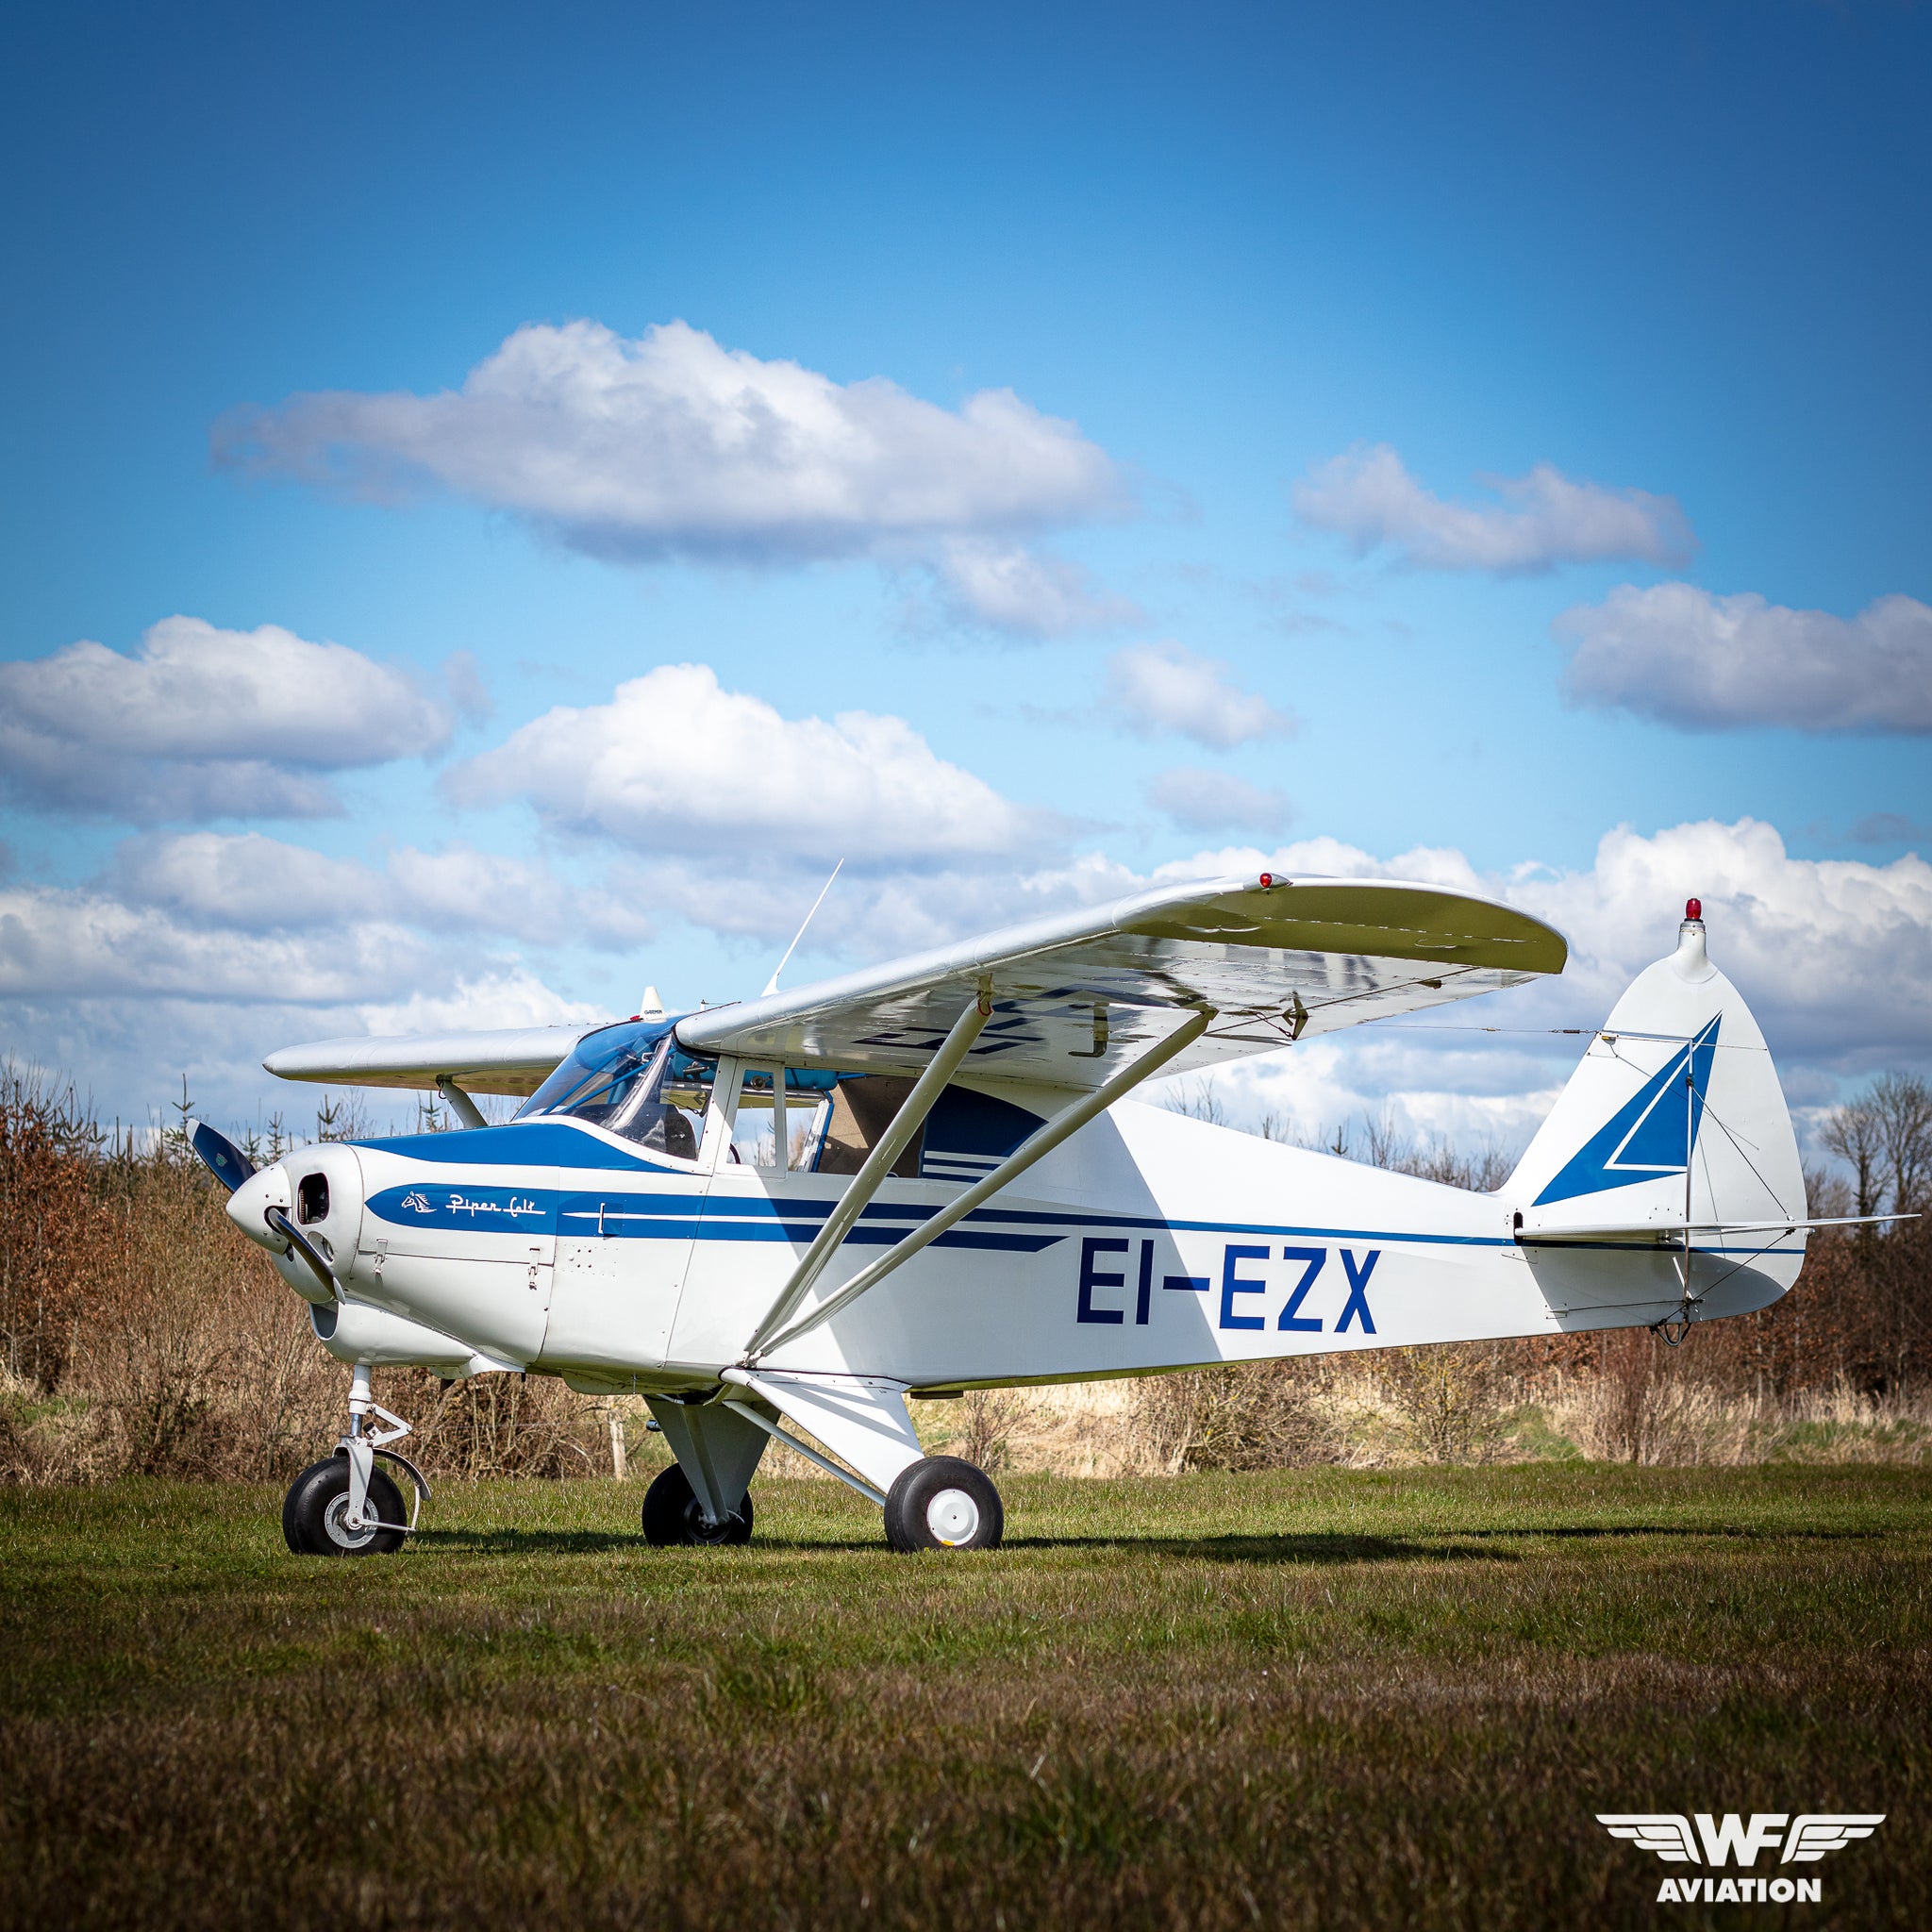 New Aircraft Arrivals - Wf Aviation